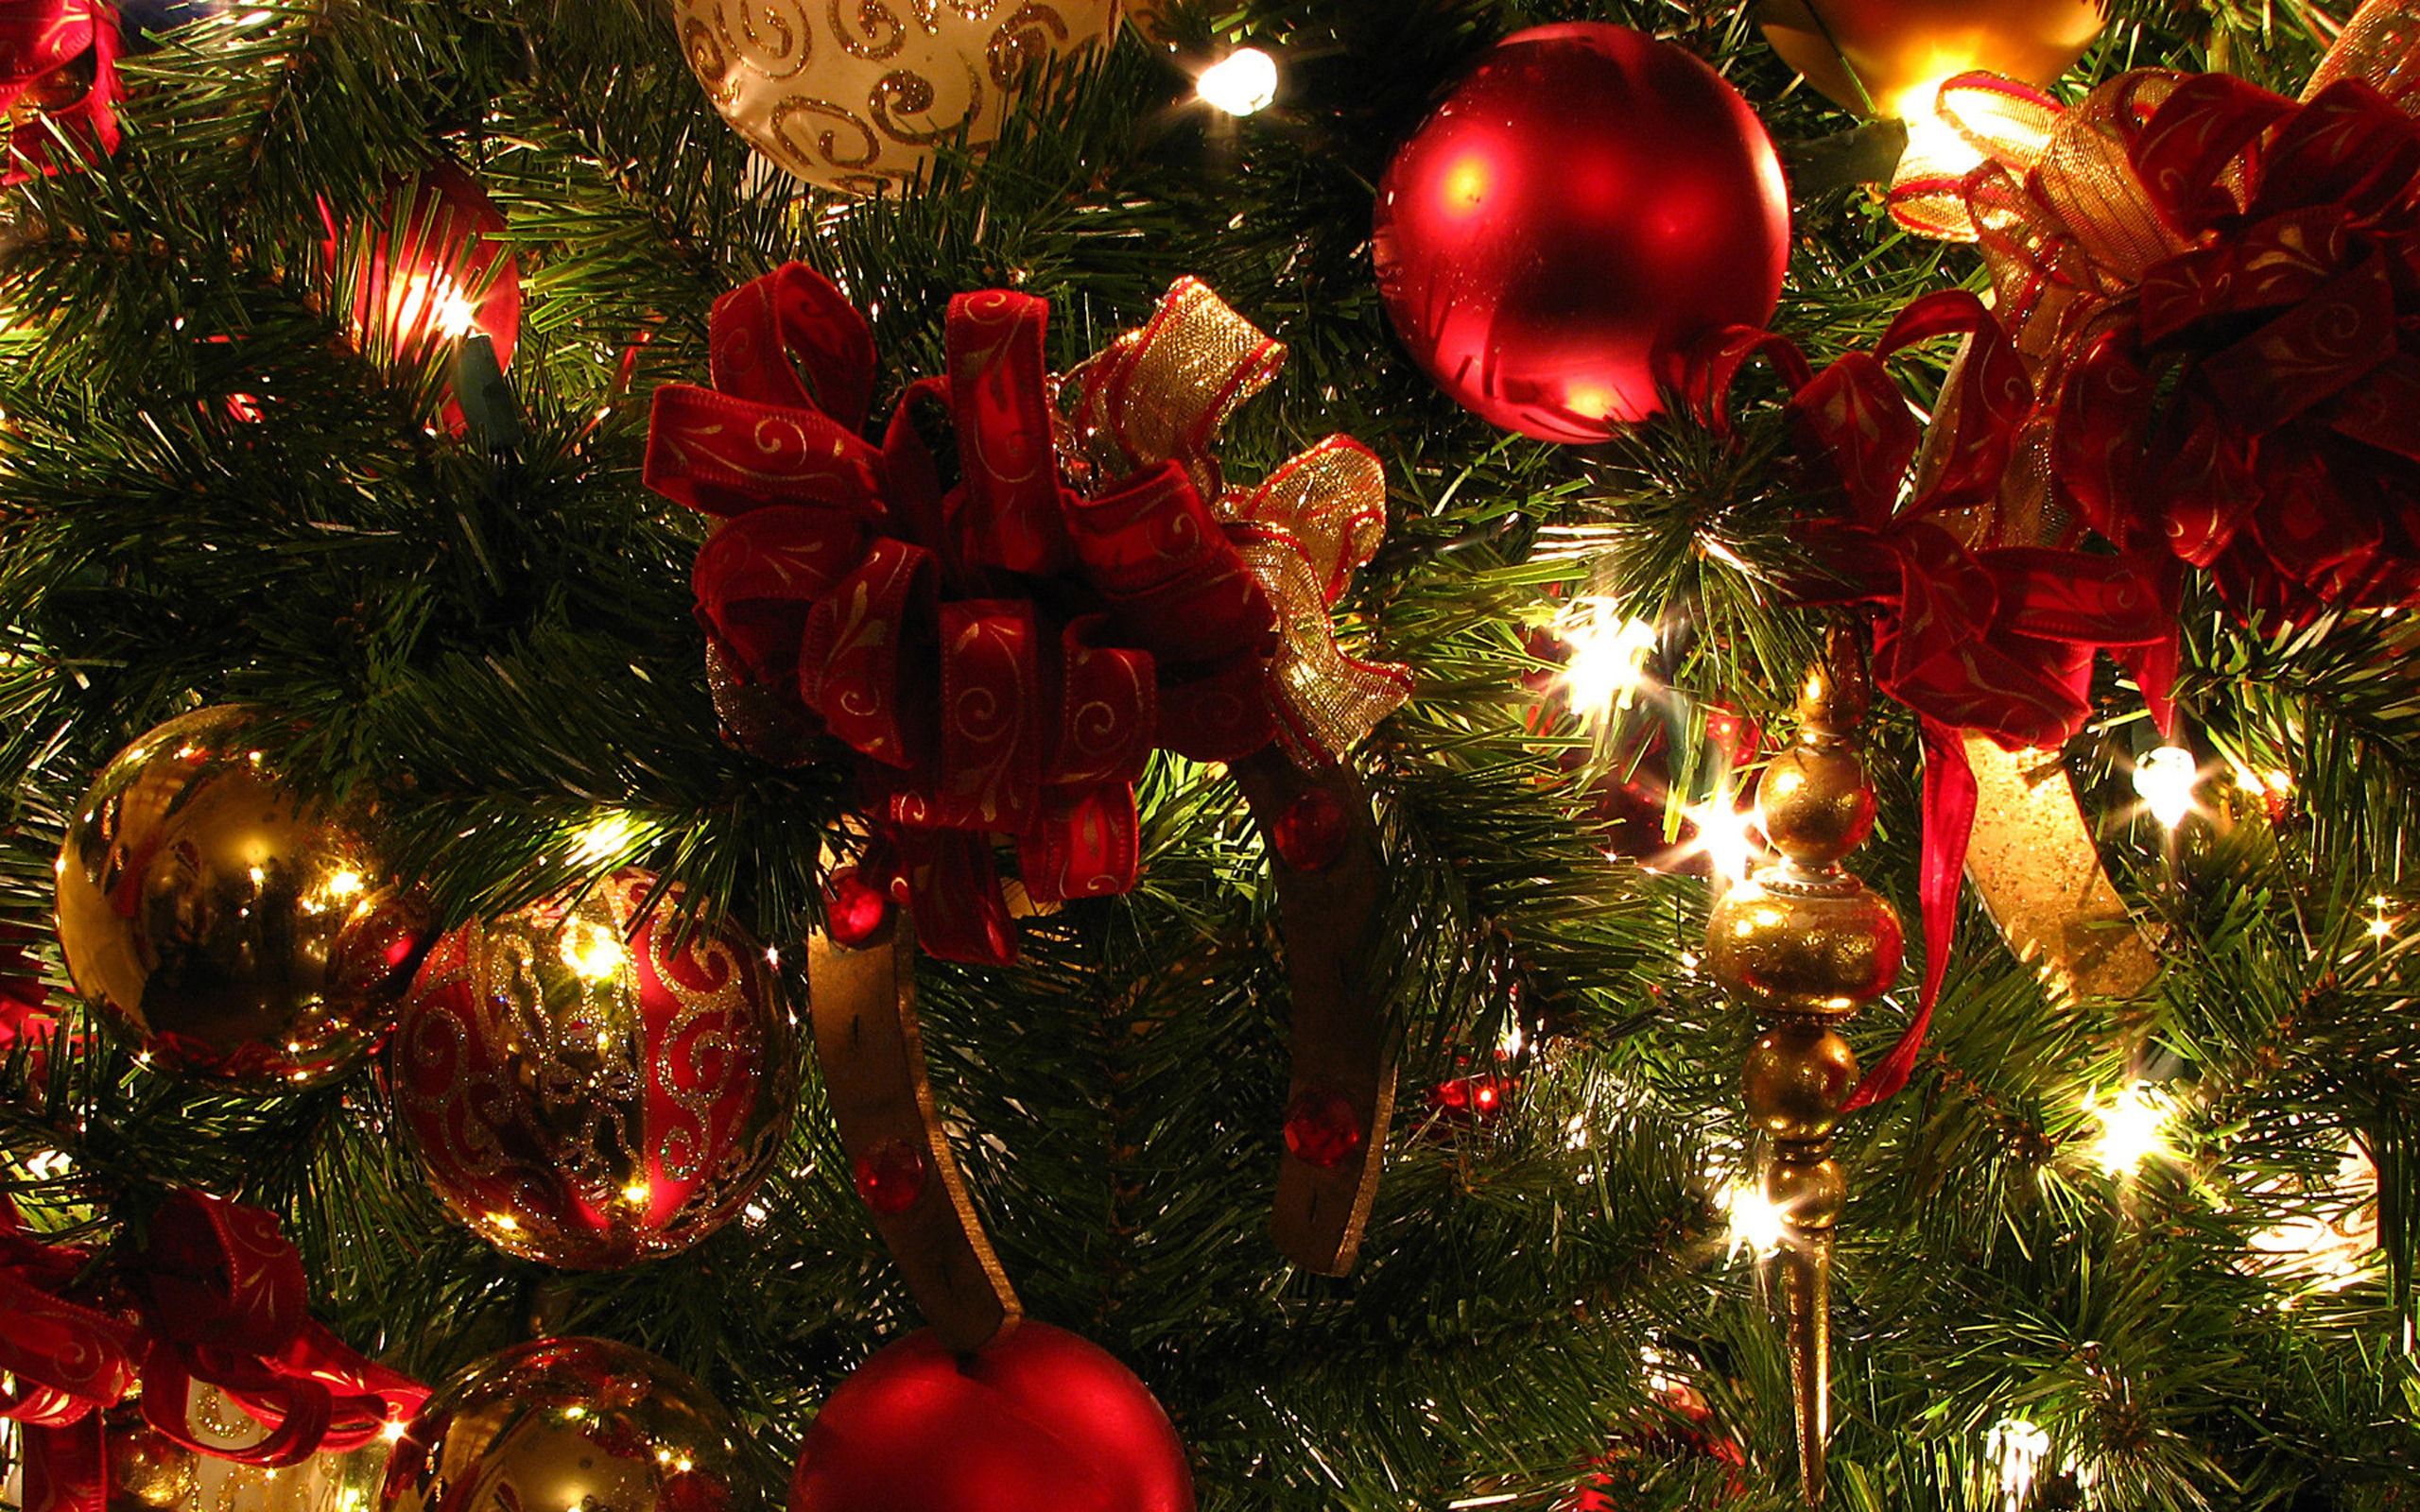 A christmas tree with ornaments and lights - Christmas lights